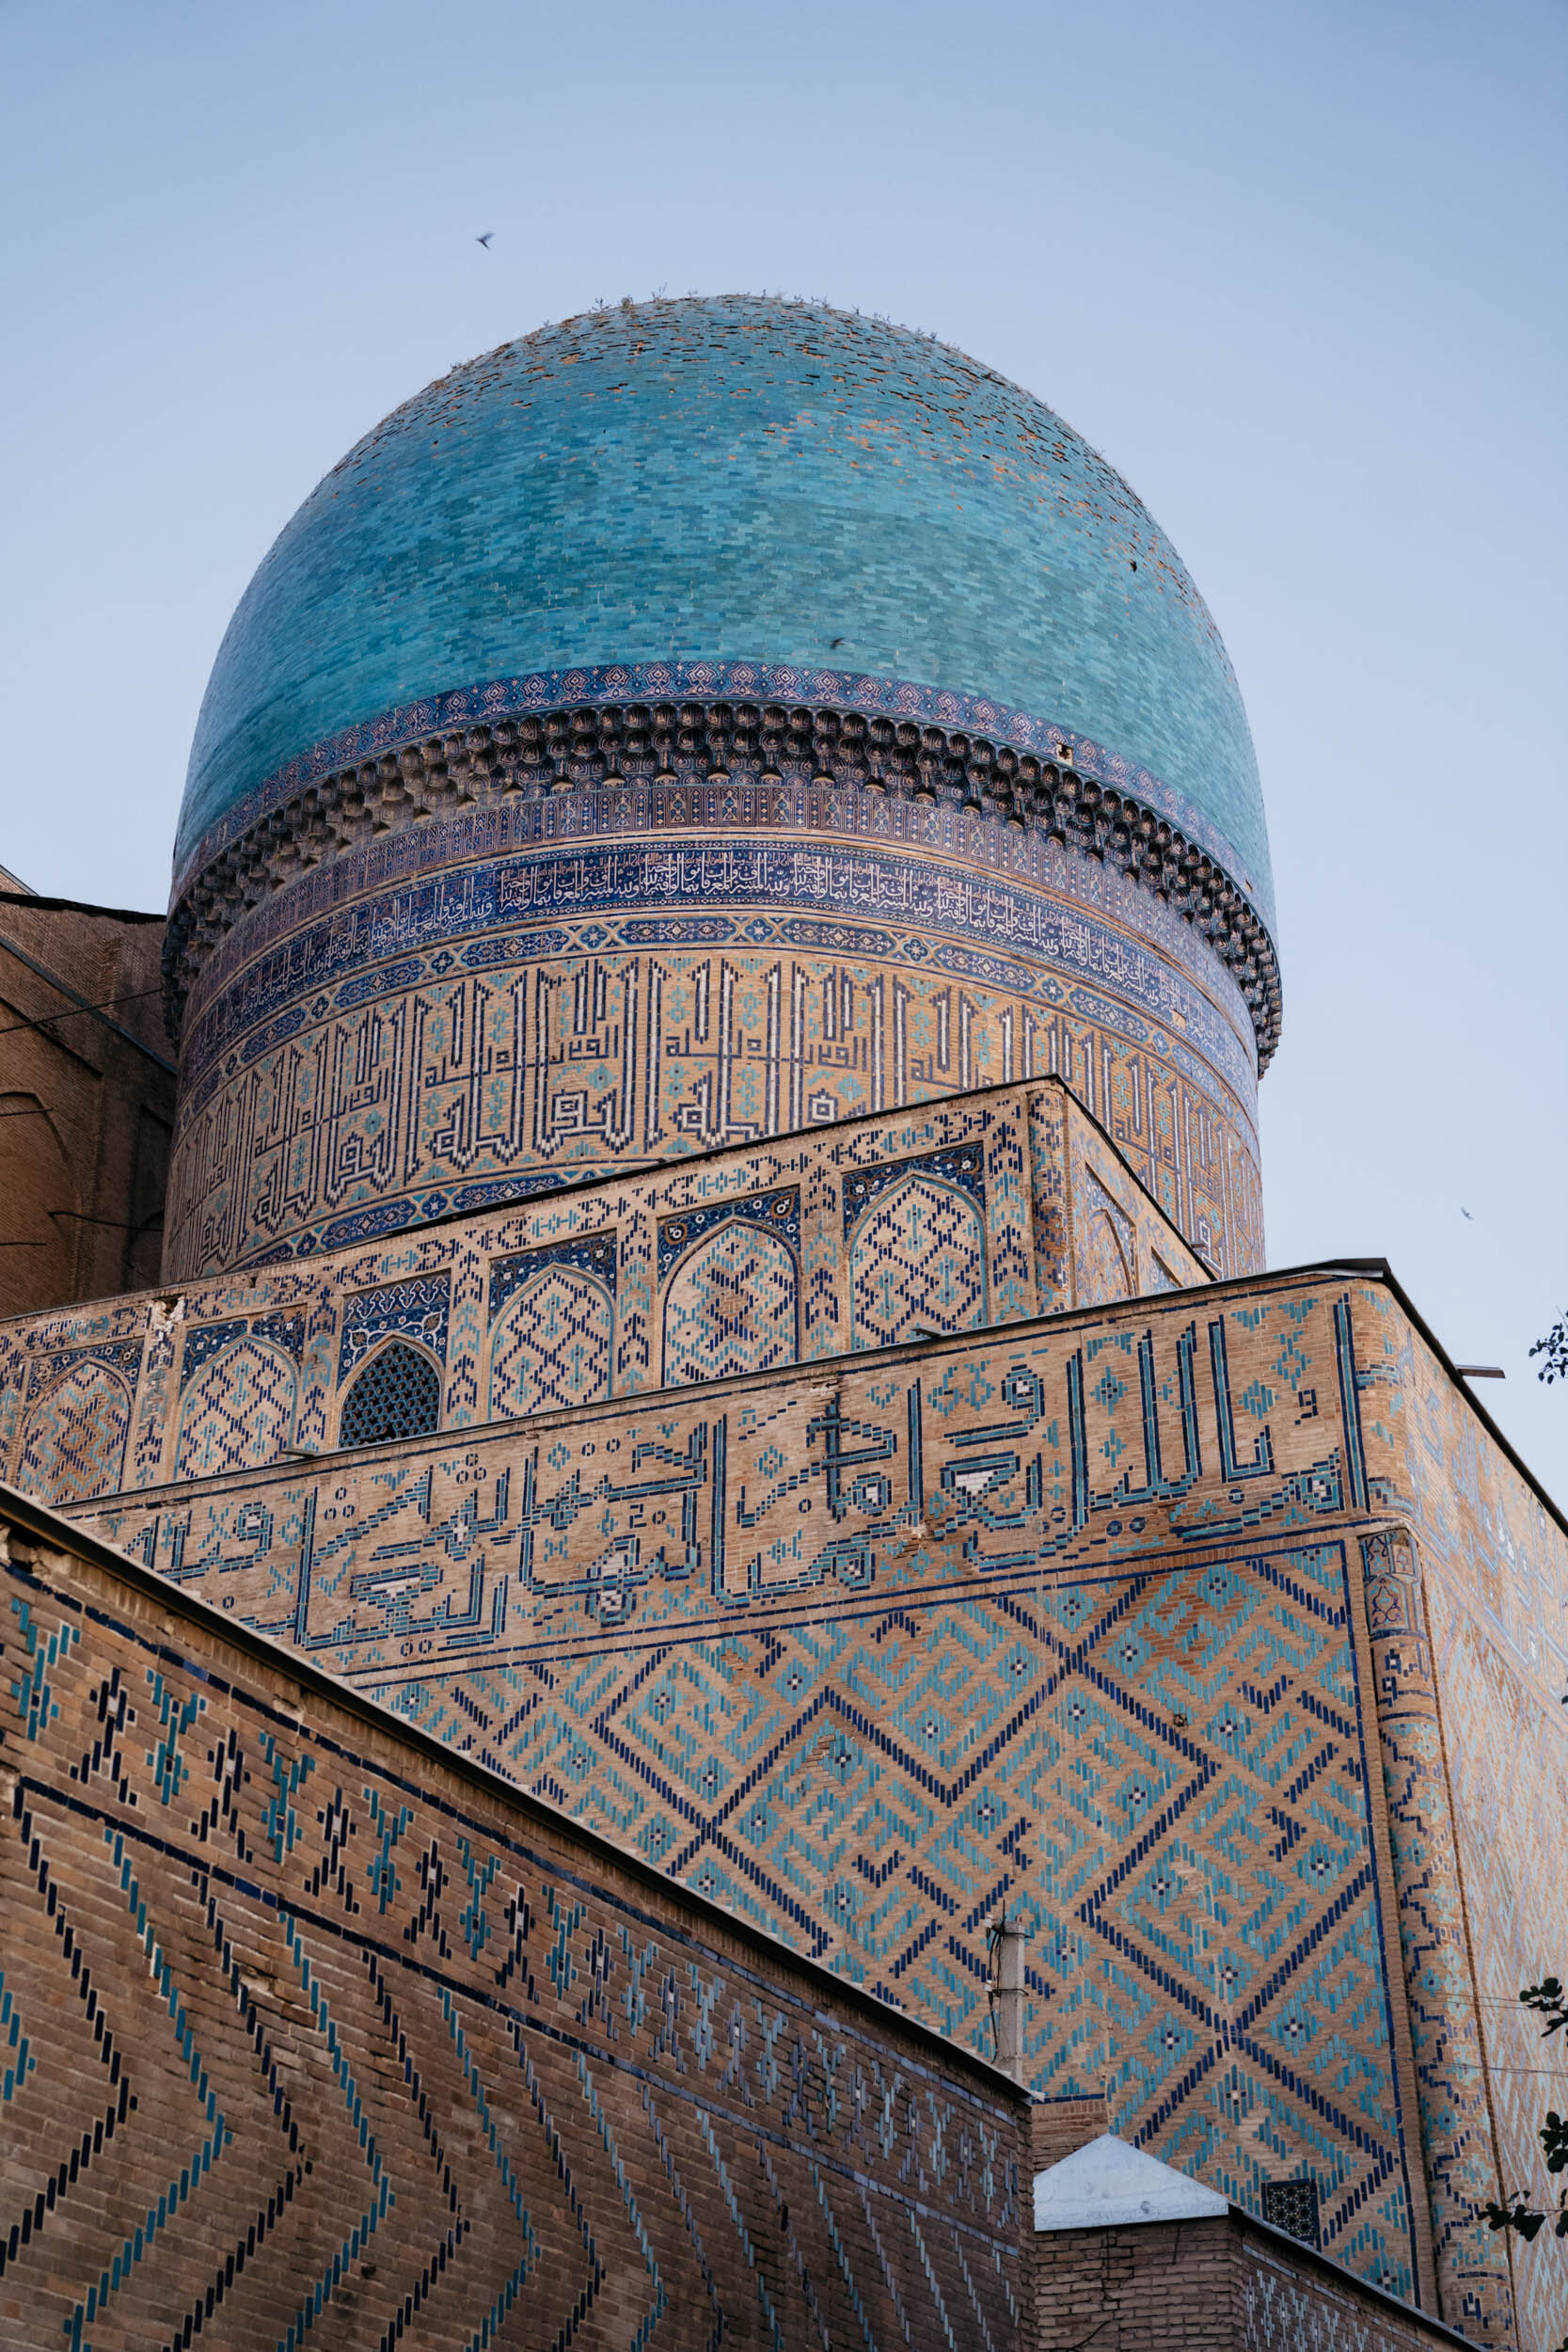  The Bibi-Khanym Mosque, Samarkand 